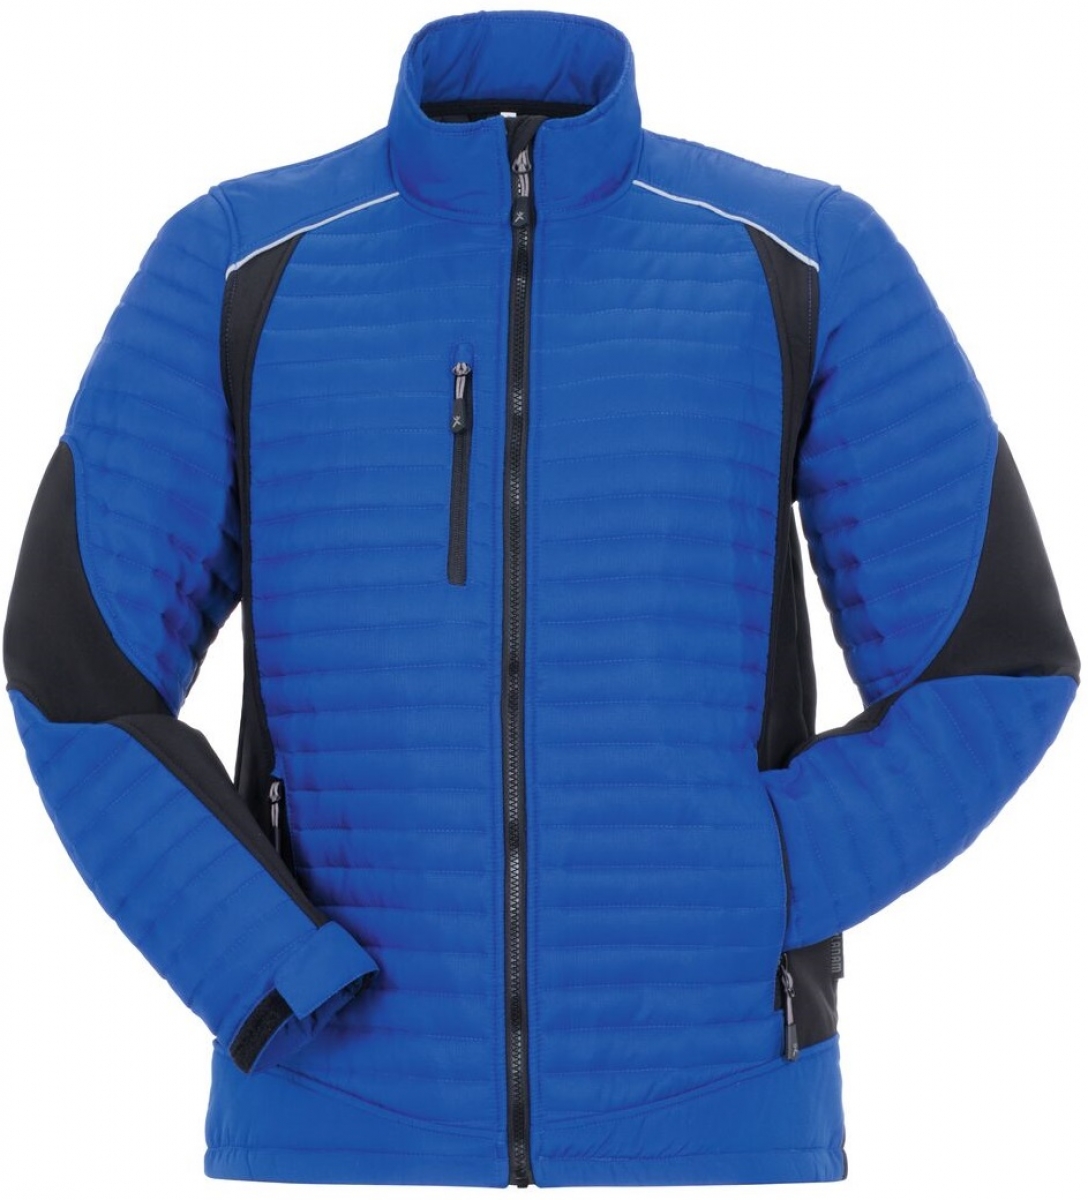 PLANAM-Workwear, Jacke, Air, Outdoor, blau/schwarz